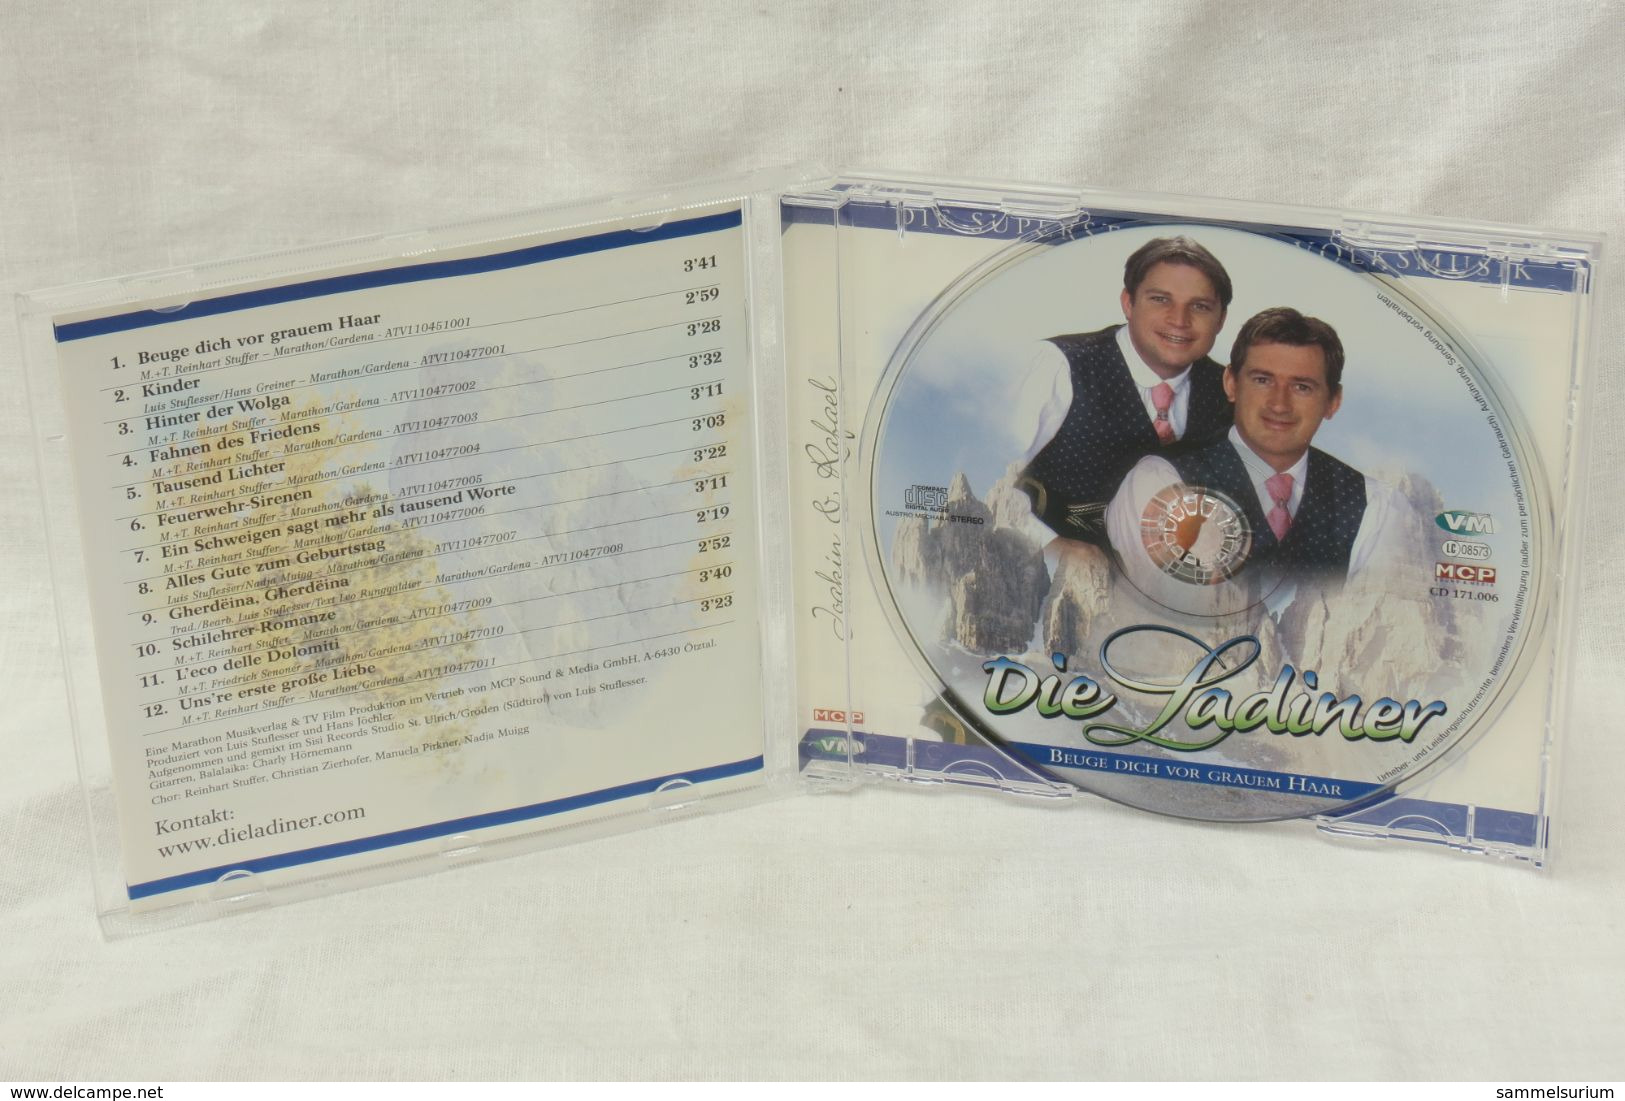 CD "Die Ladiner" Beuge Dich Vor Grauem Haar - Andere - Duitstalig